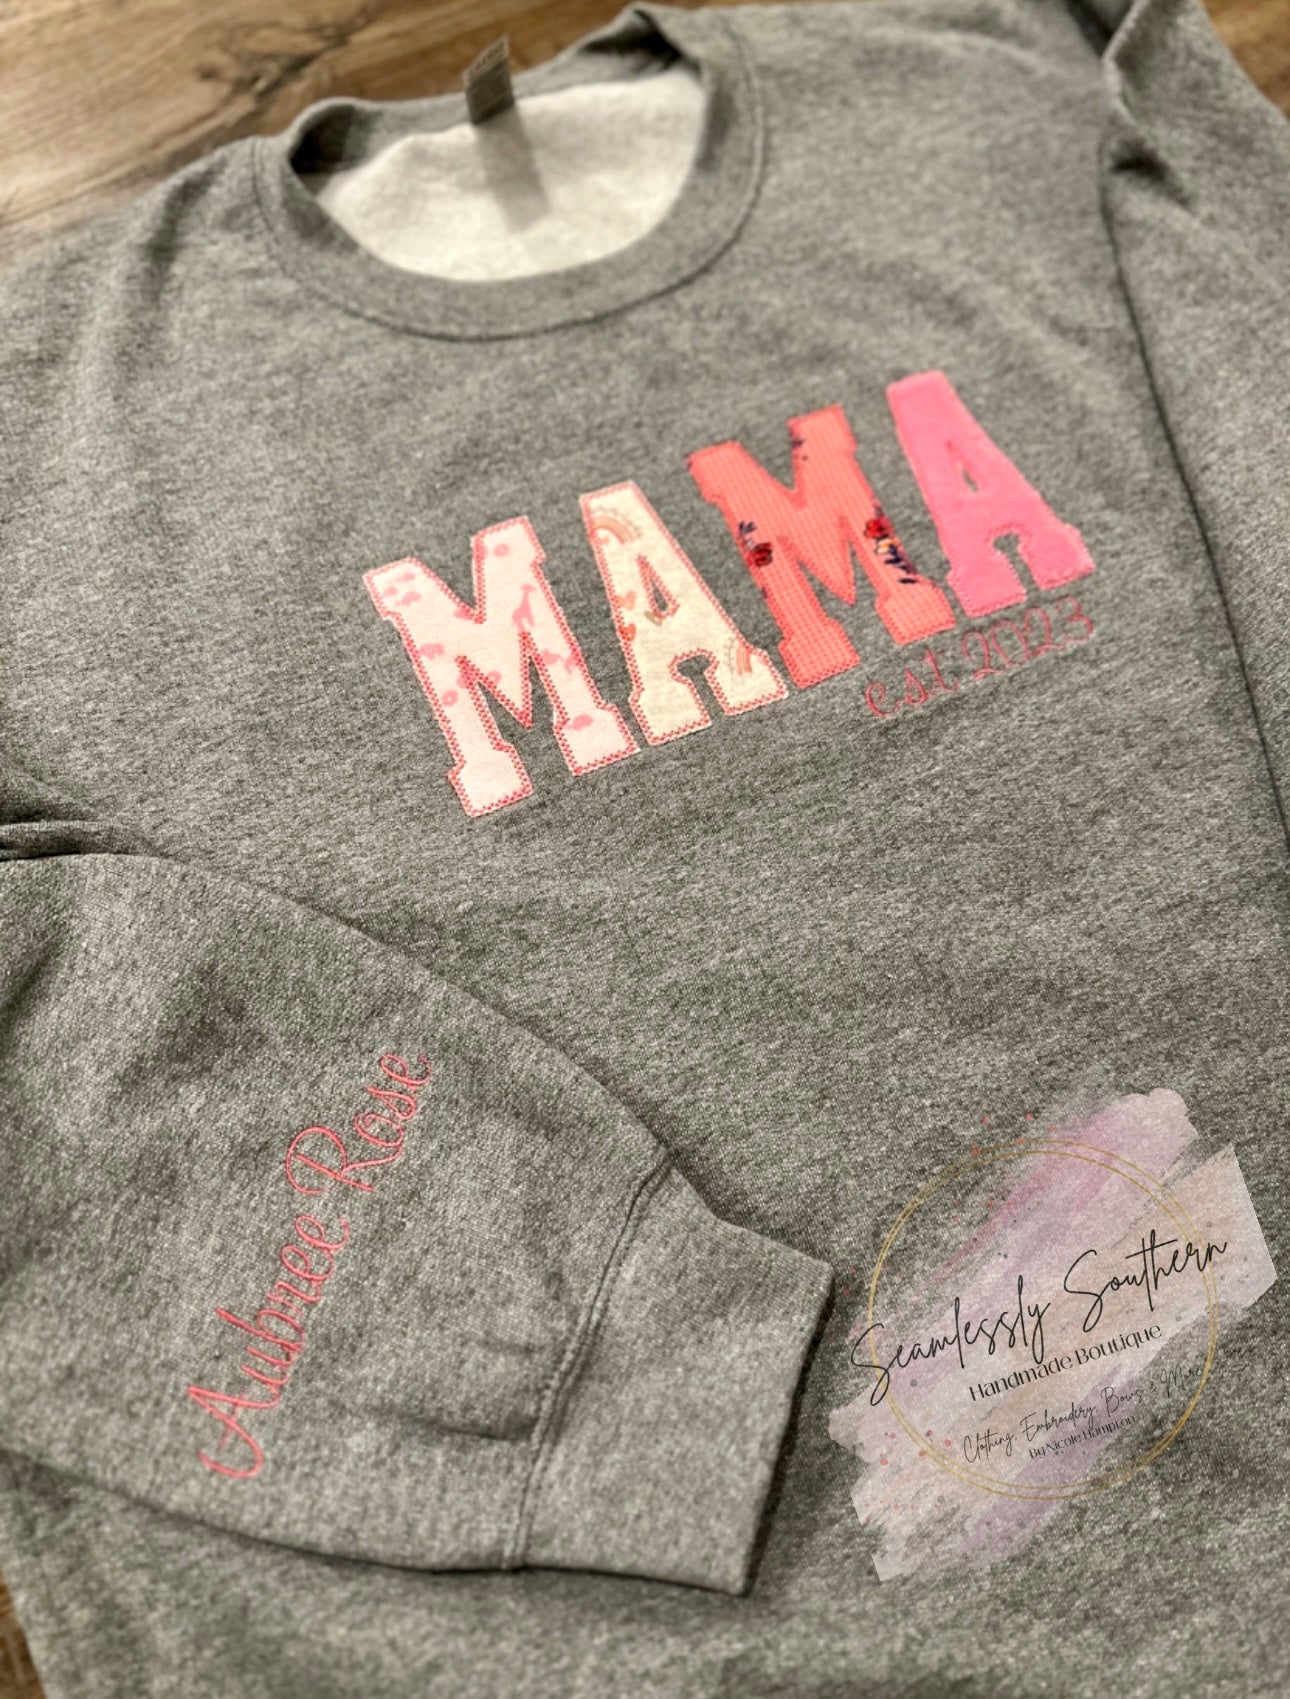 Personalized MAMA Onesie Embroidered Sweatshirt